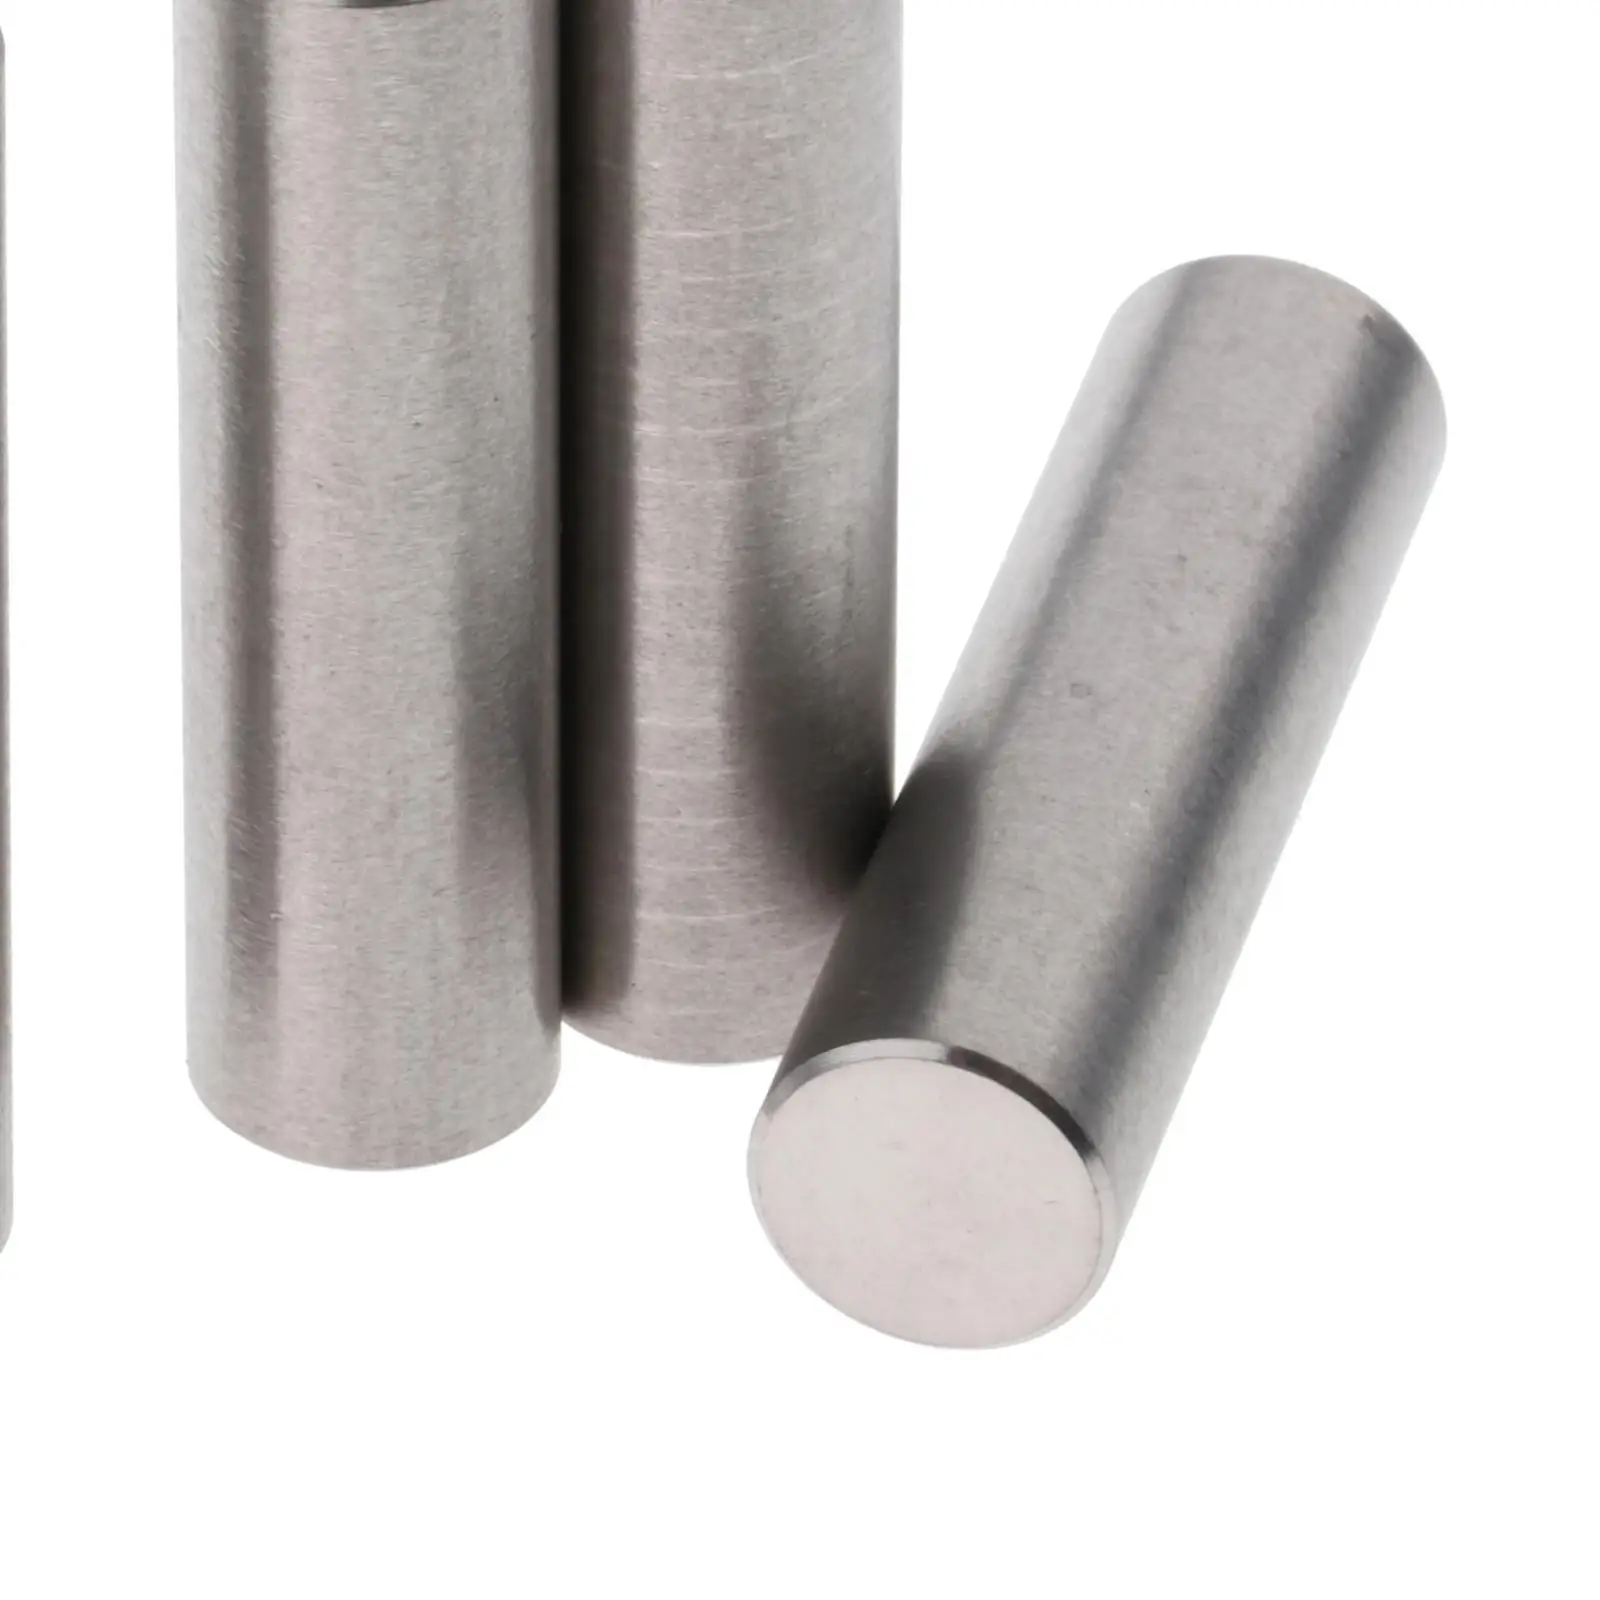 4 Pieces Titanium Pin Fit for Series Accessories